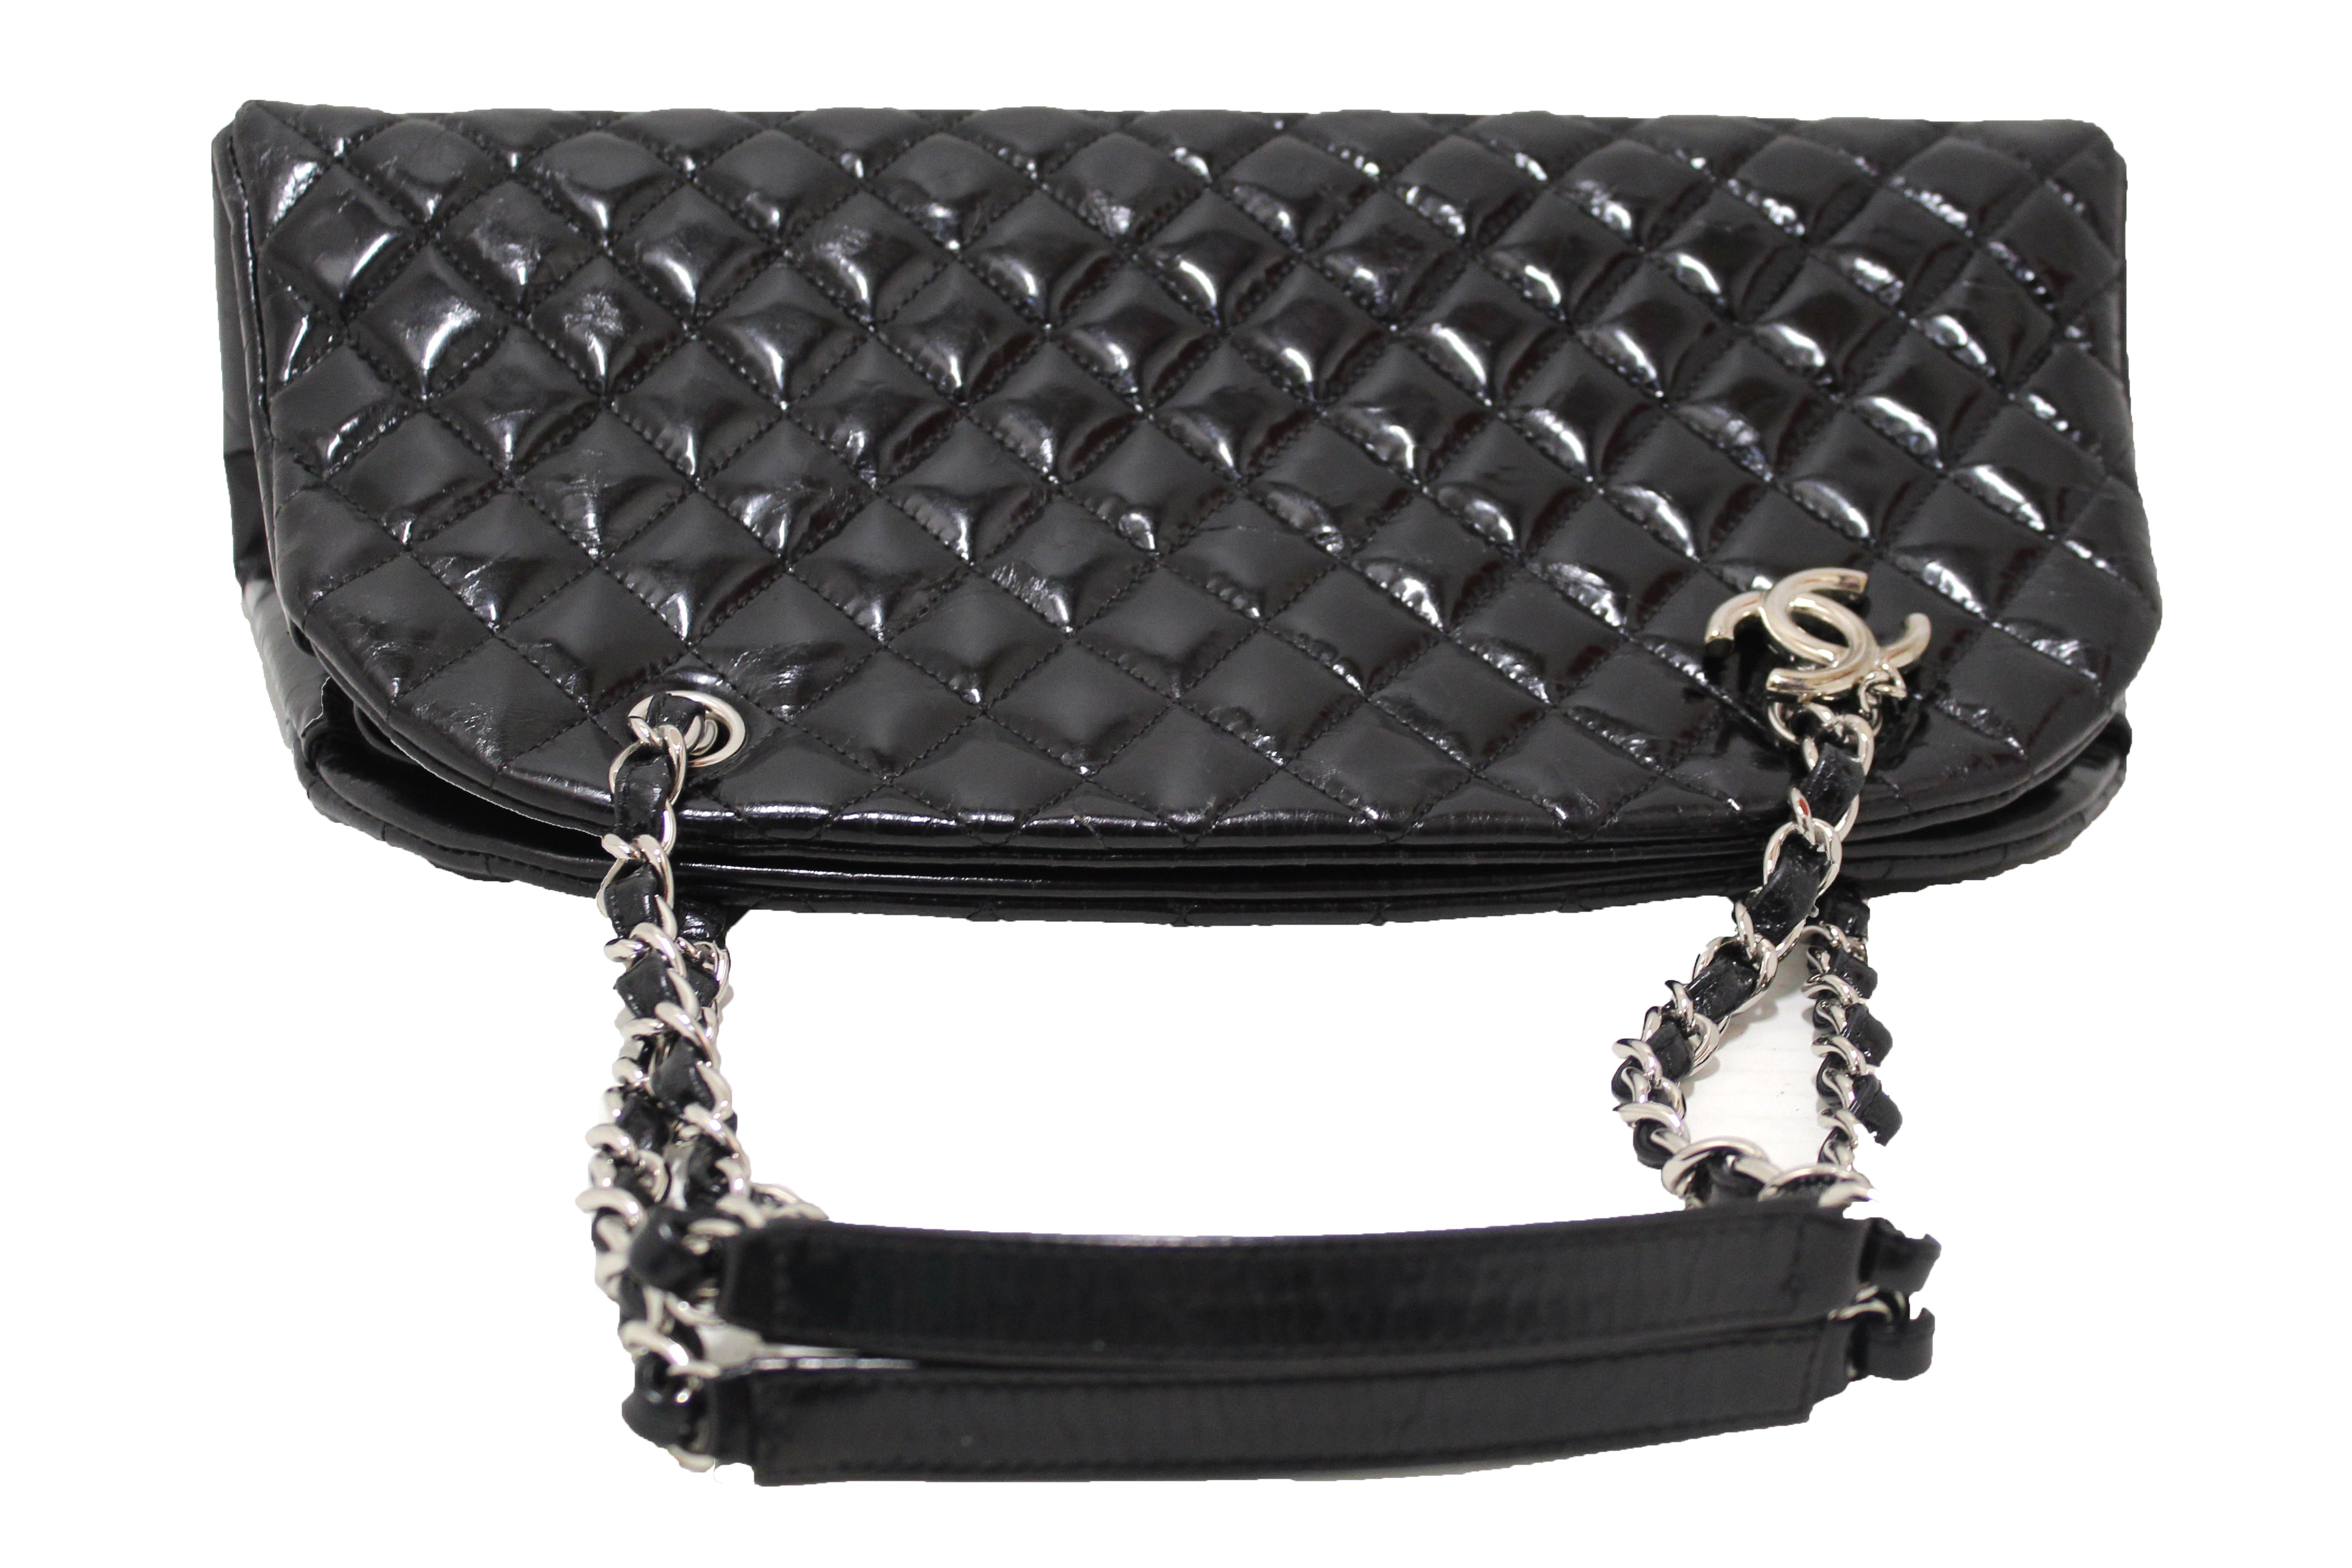 FWRD Renew Chanel Matelasse Shoulder Bag in Black